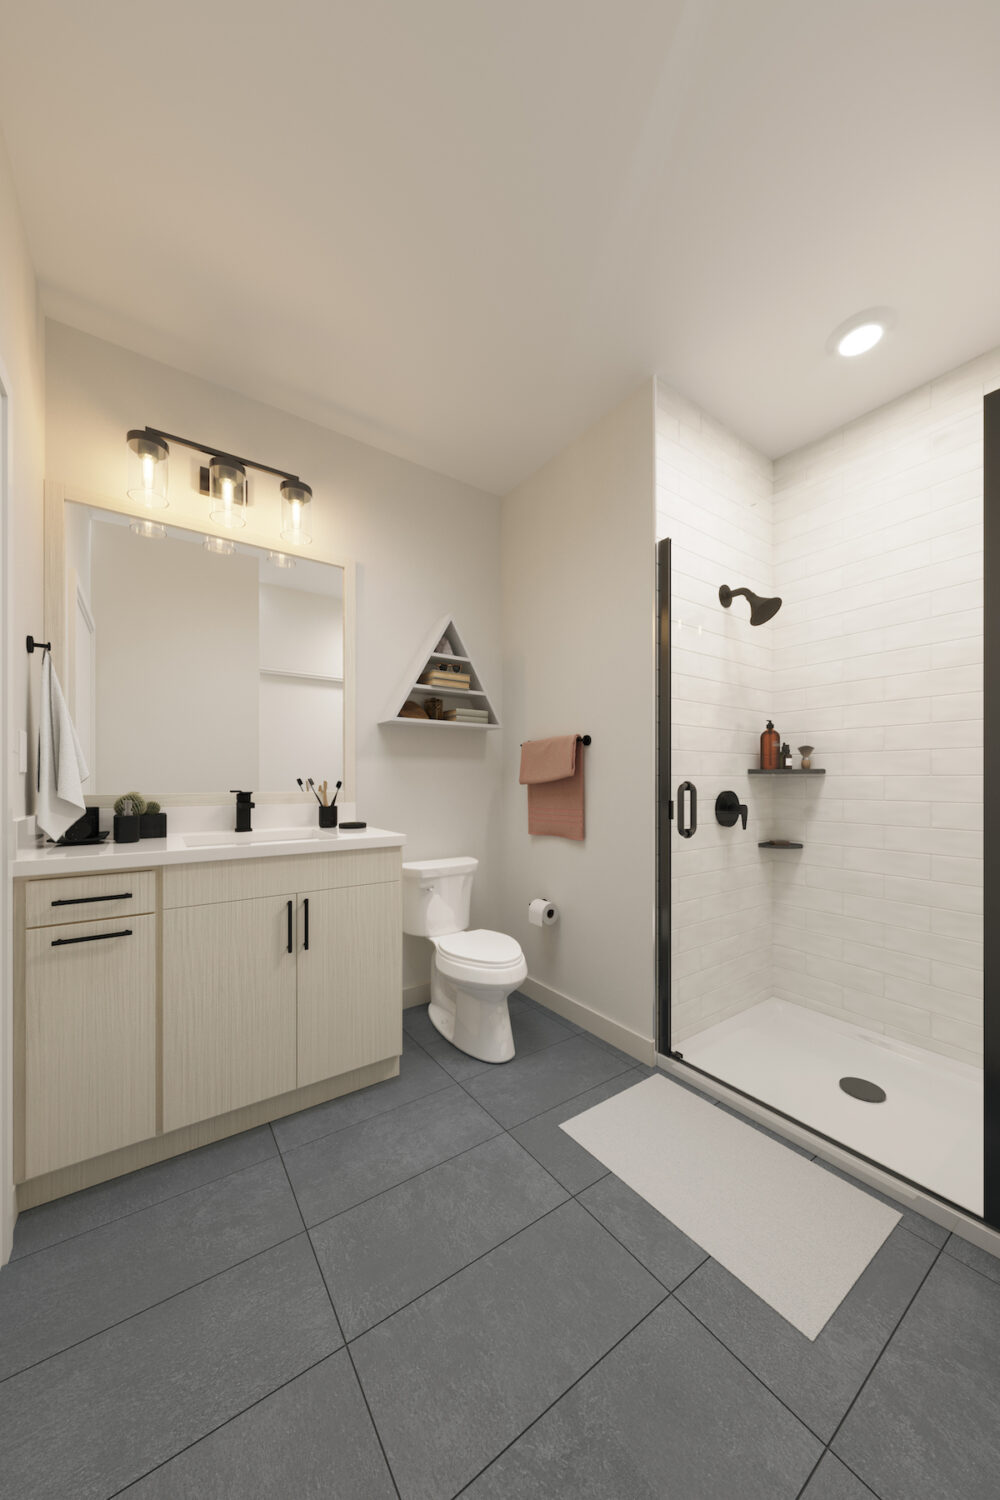 Bathroom with large walk-in shower, designer lighting, and single sink vanity